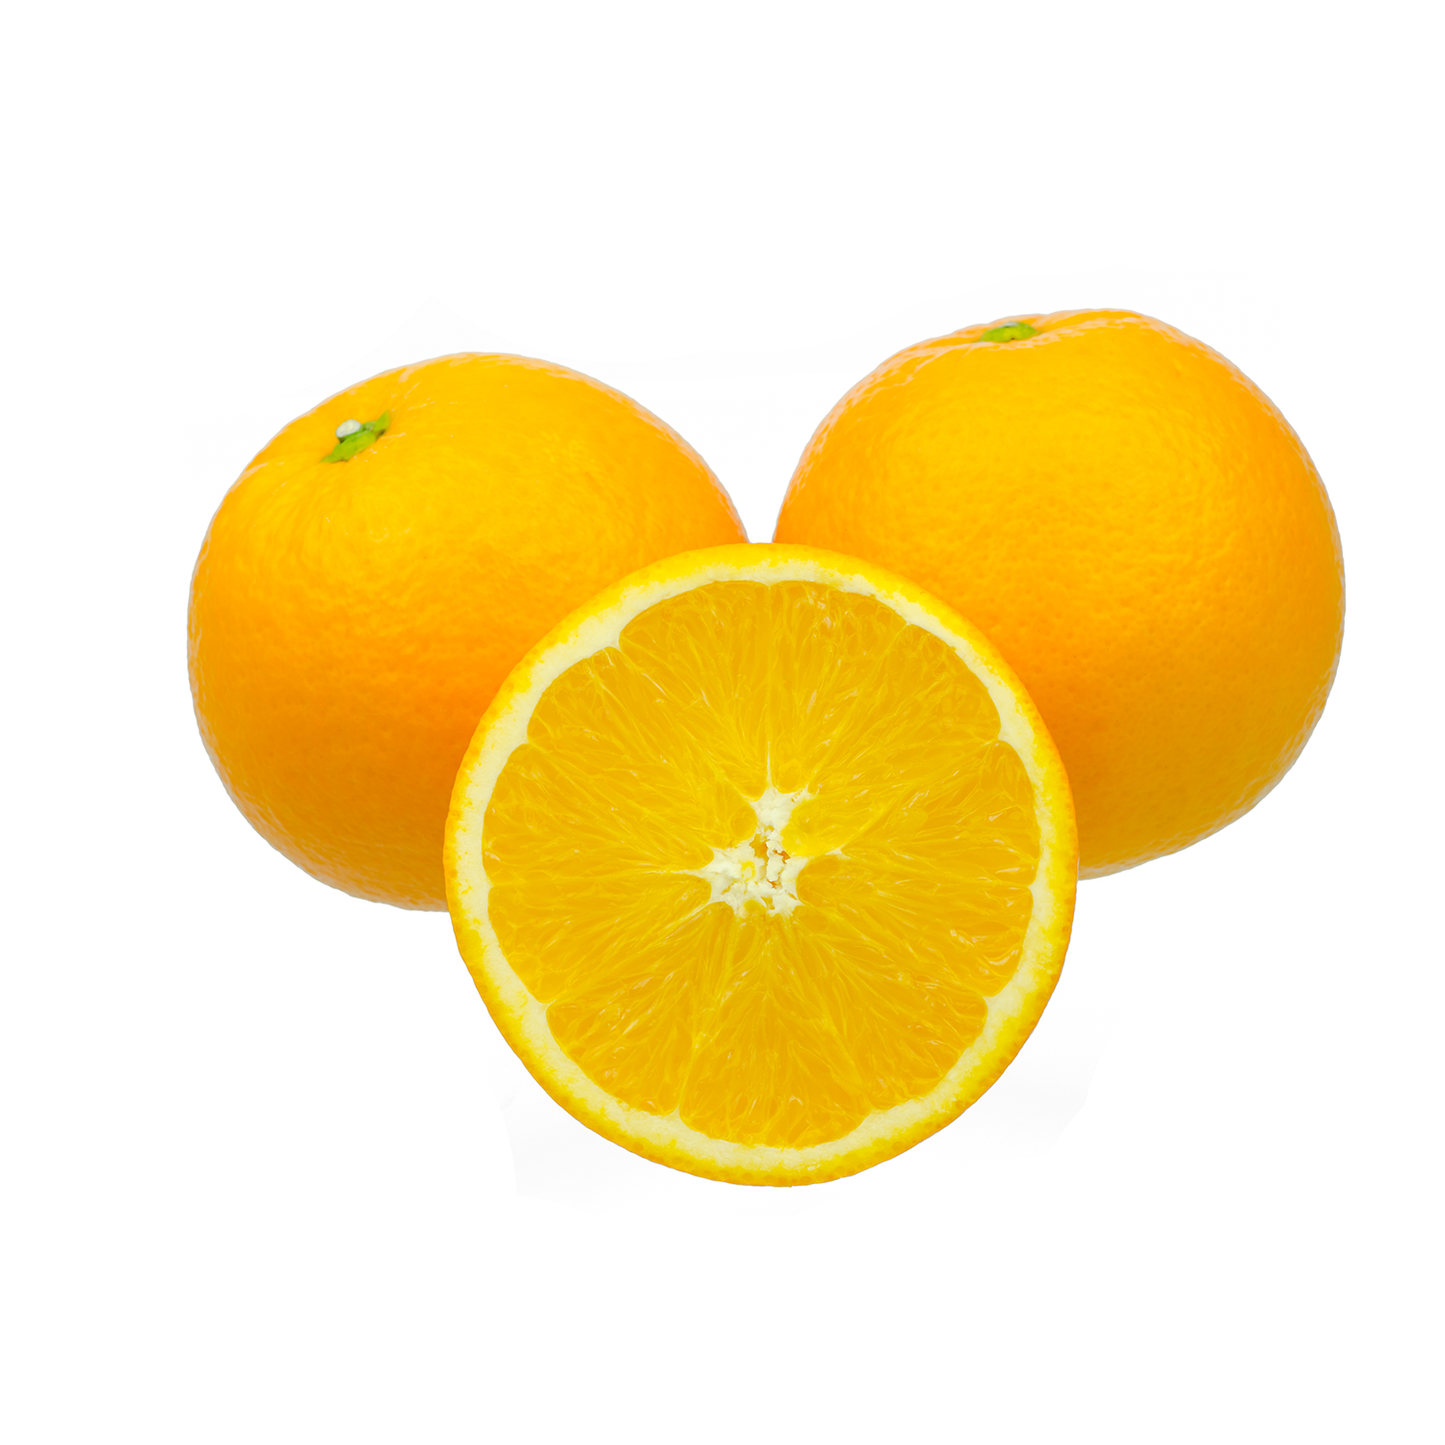 Oranges - Navel / 1 pc